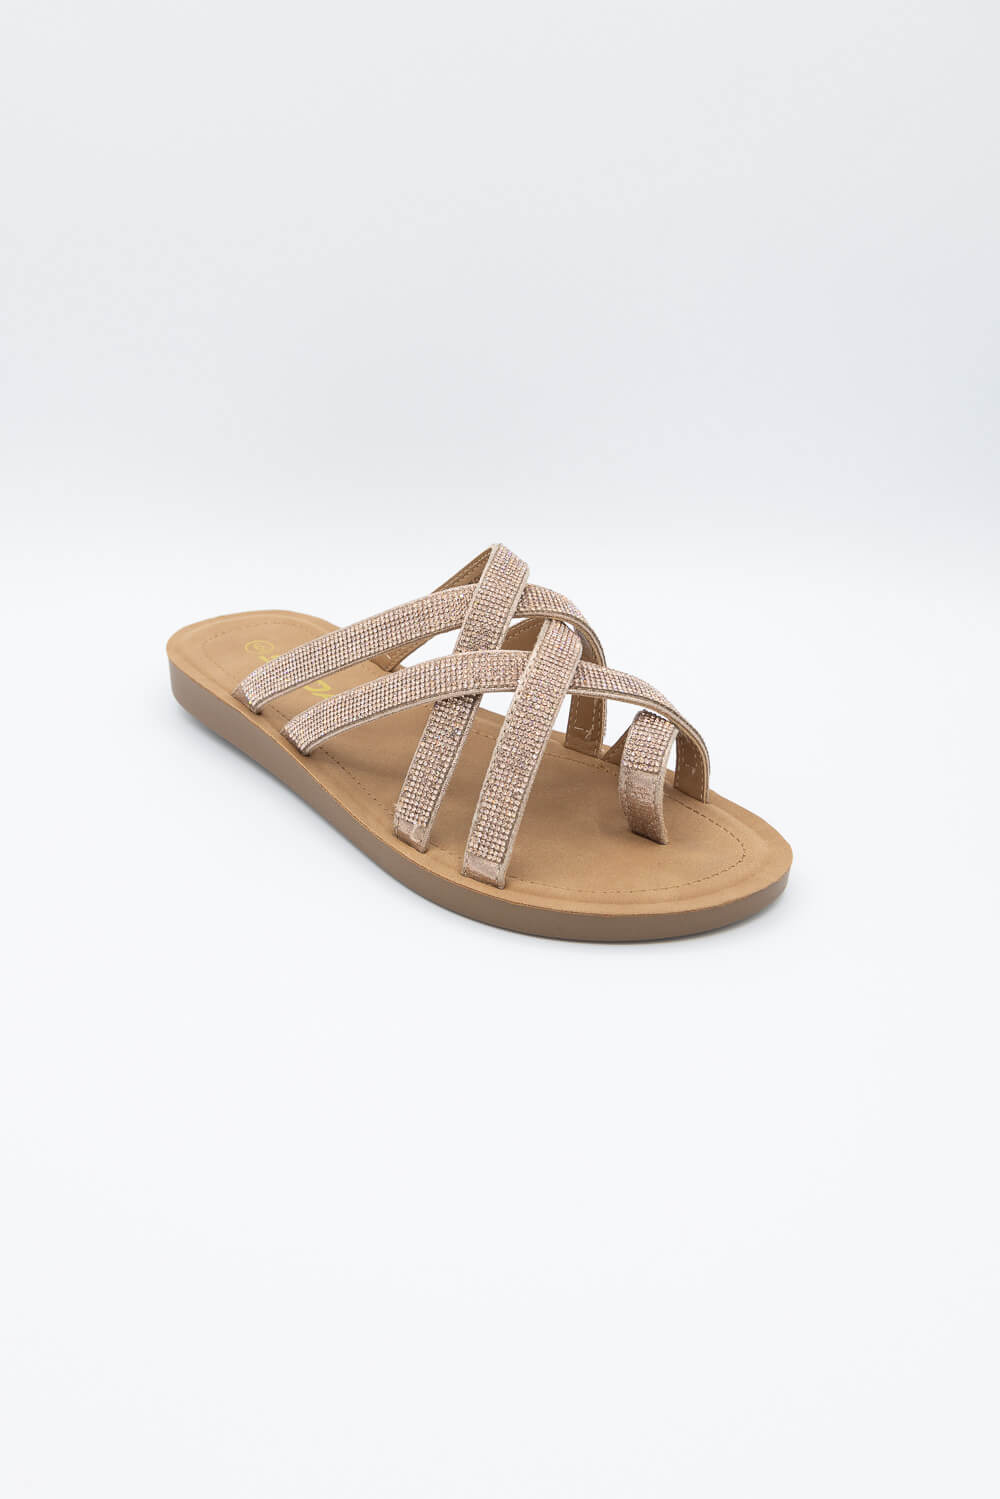 Rhinestone Criss Cross Strappy Slide Sandals - Tan